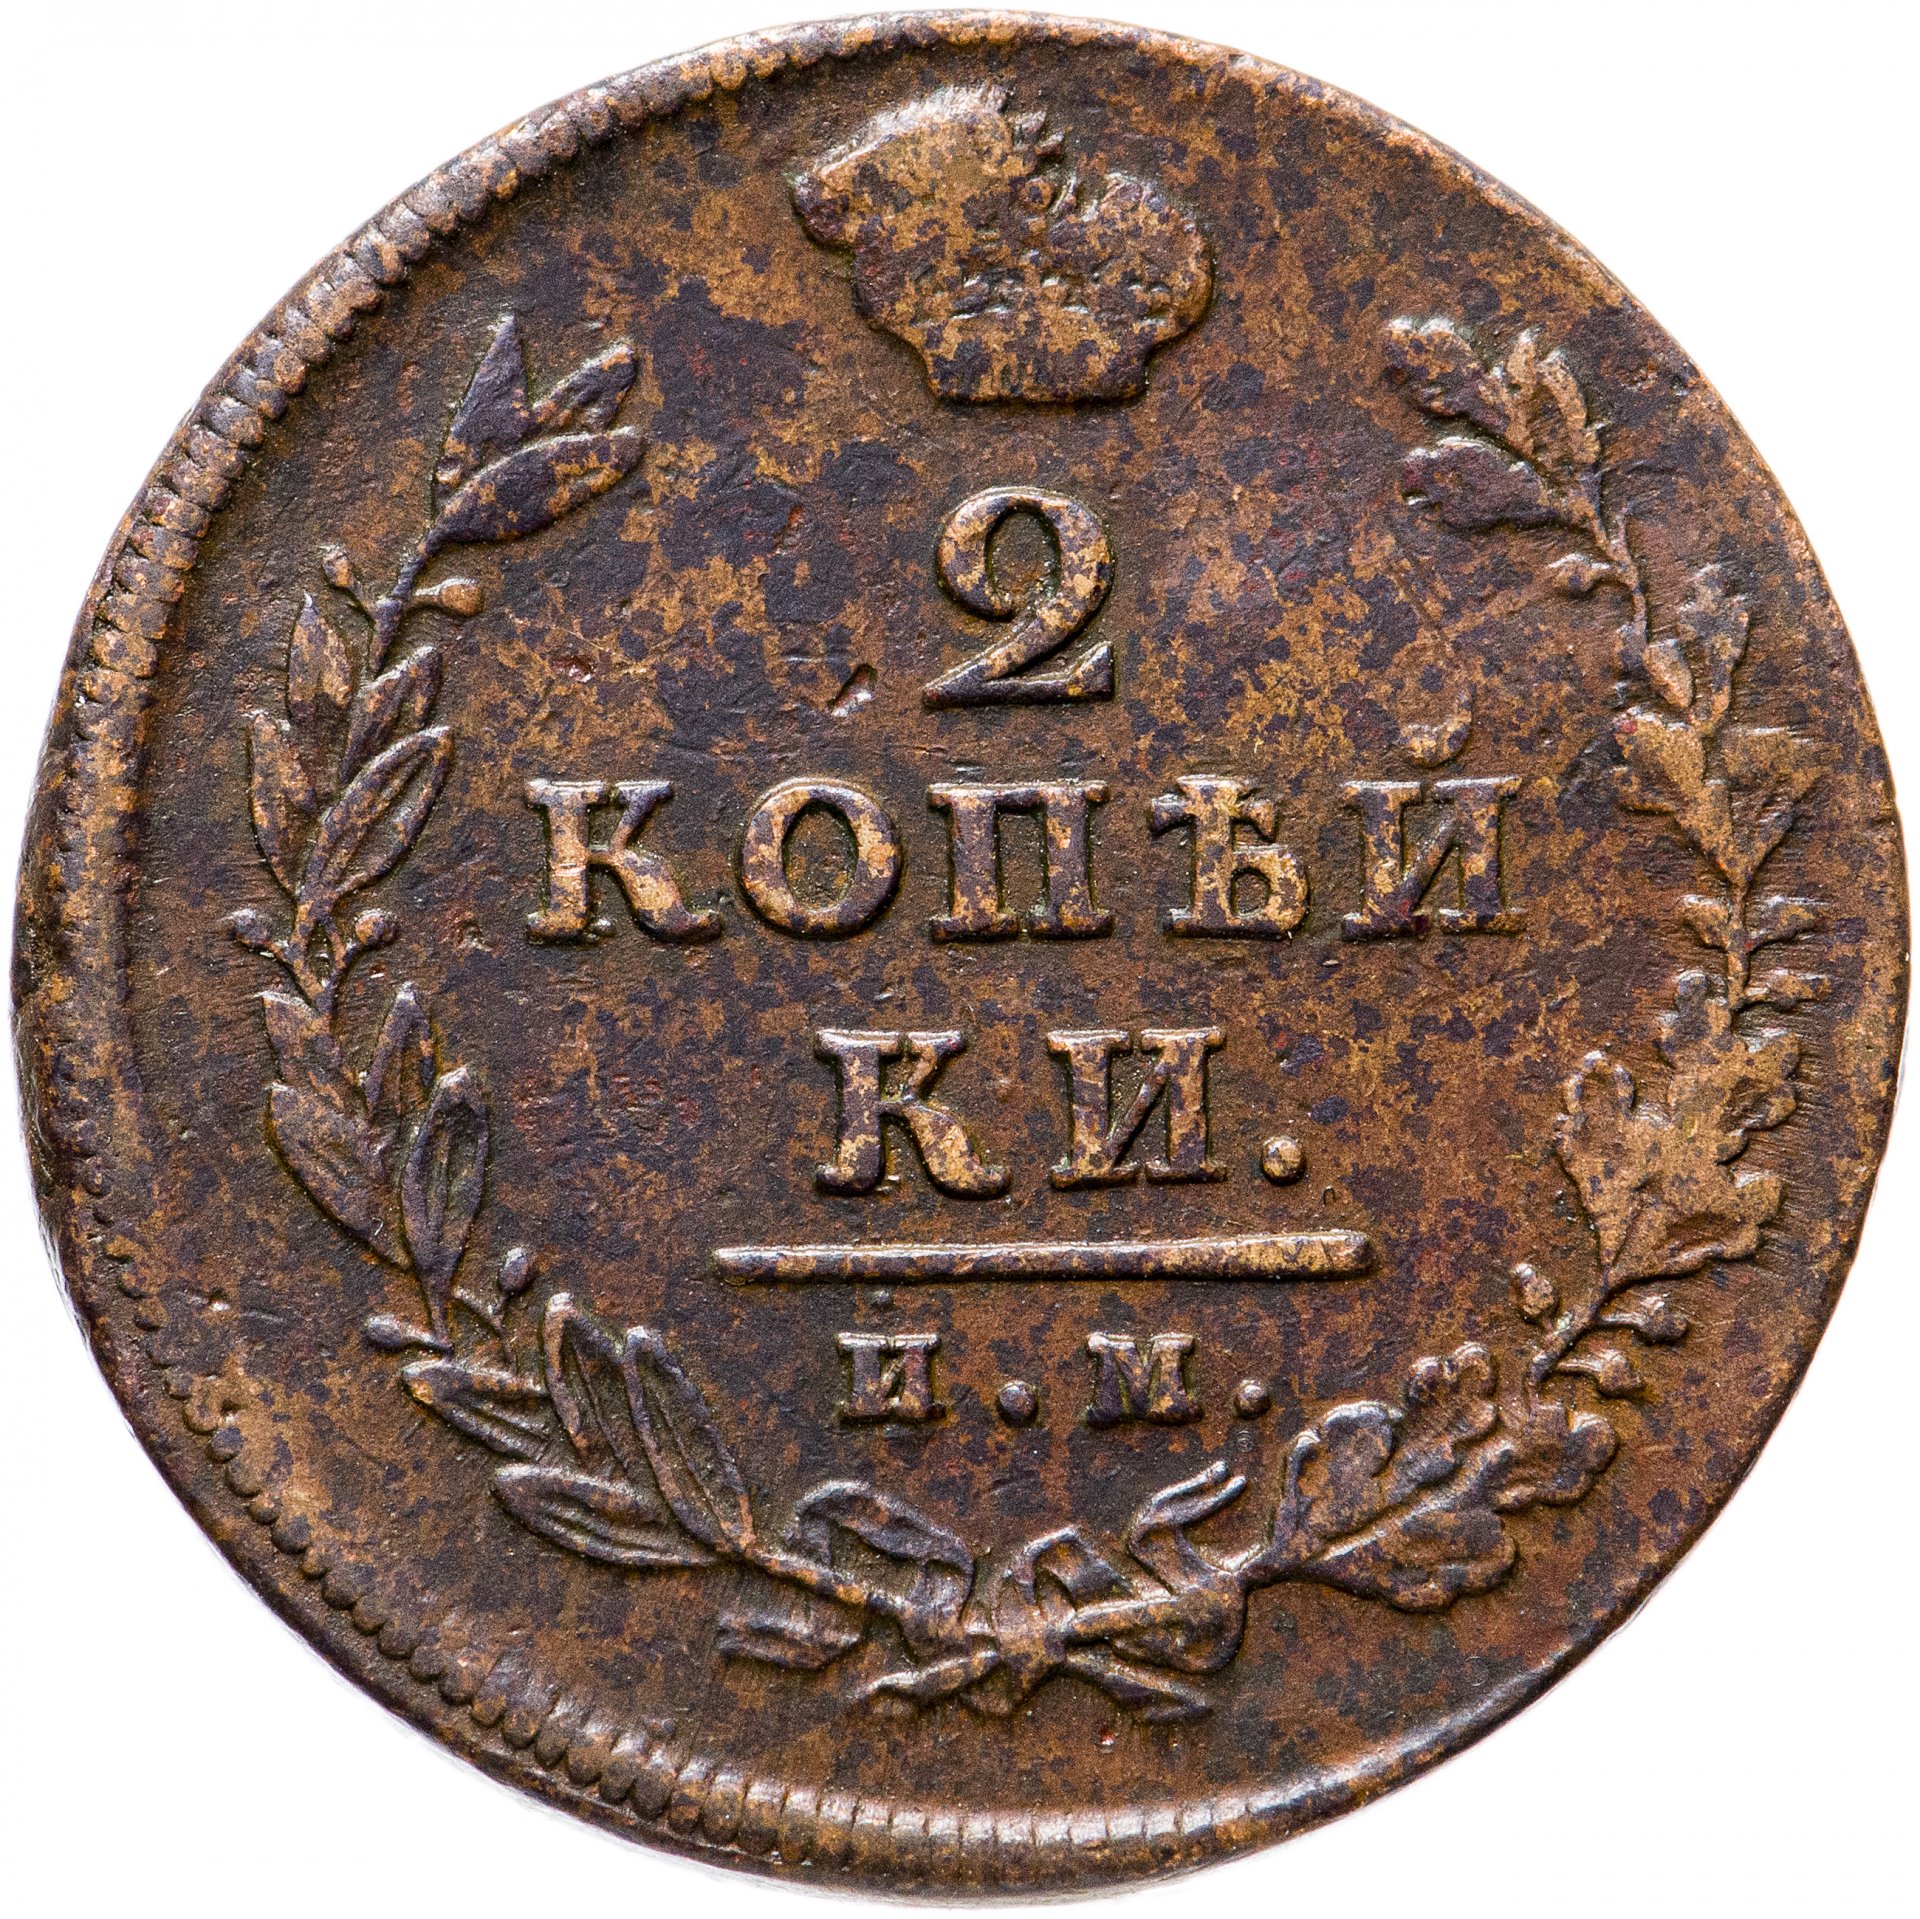 2 копейки царские. Две копейки 1811. 2 Копейки 1892 ем. Царская монета 2 копейки буквами.